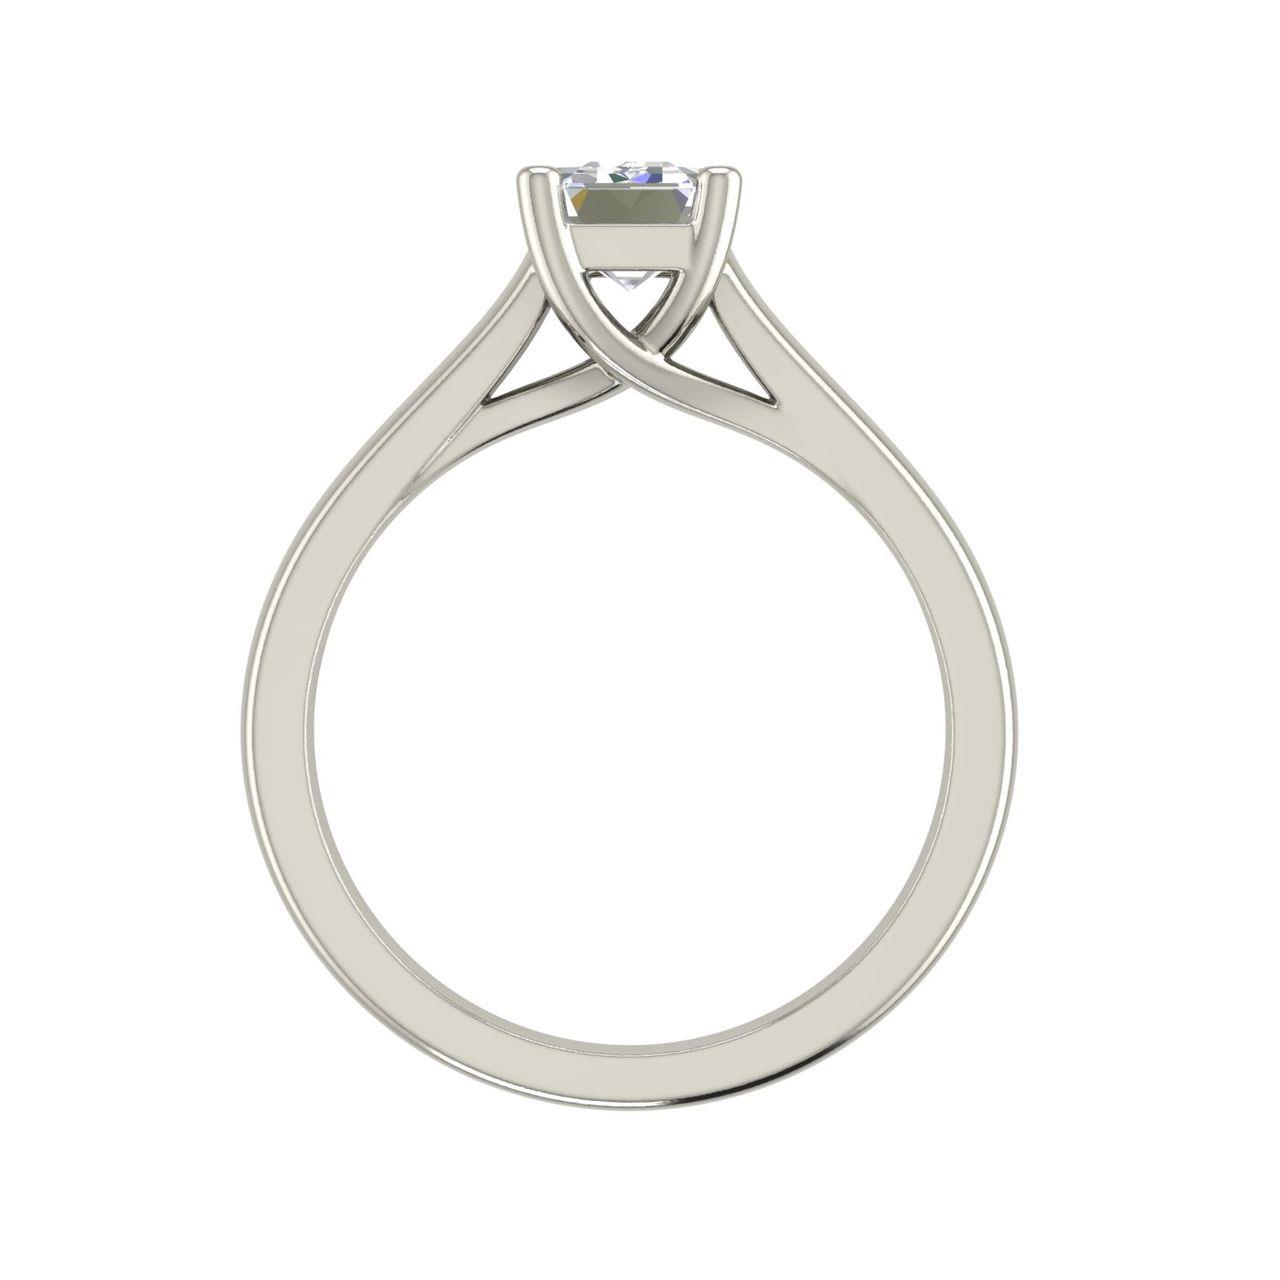 Trellis Solitaire 1 Ct Emerald Cut Diamond Engagement Ring